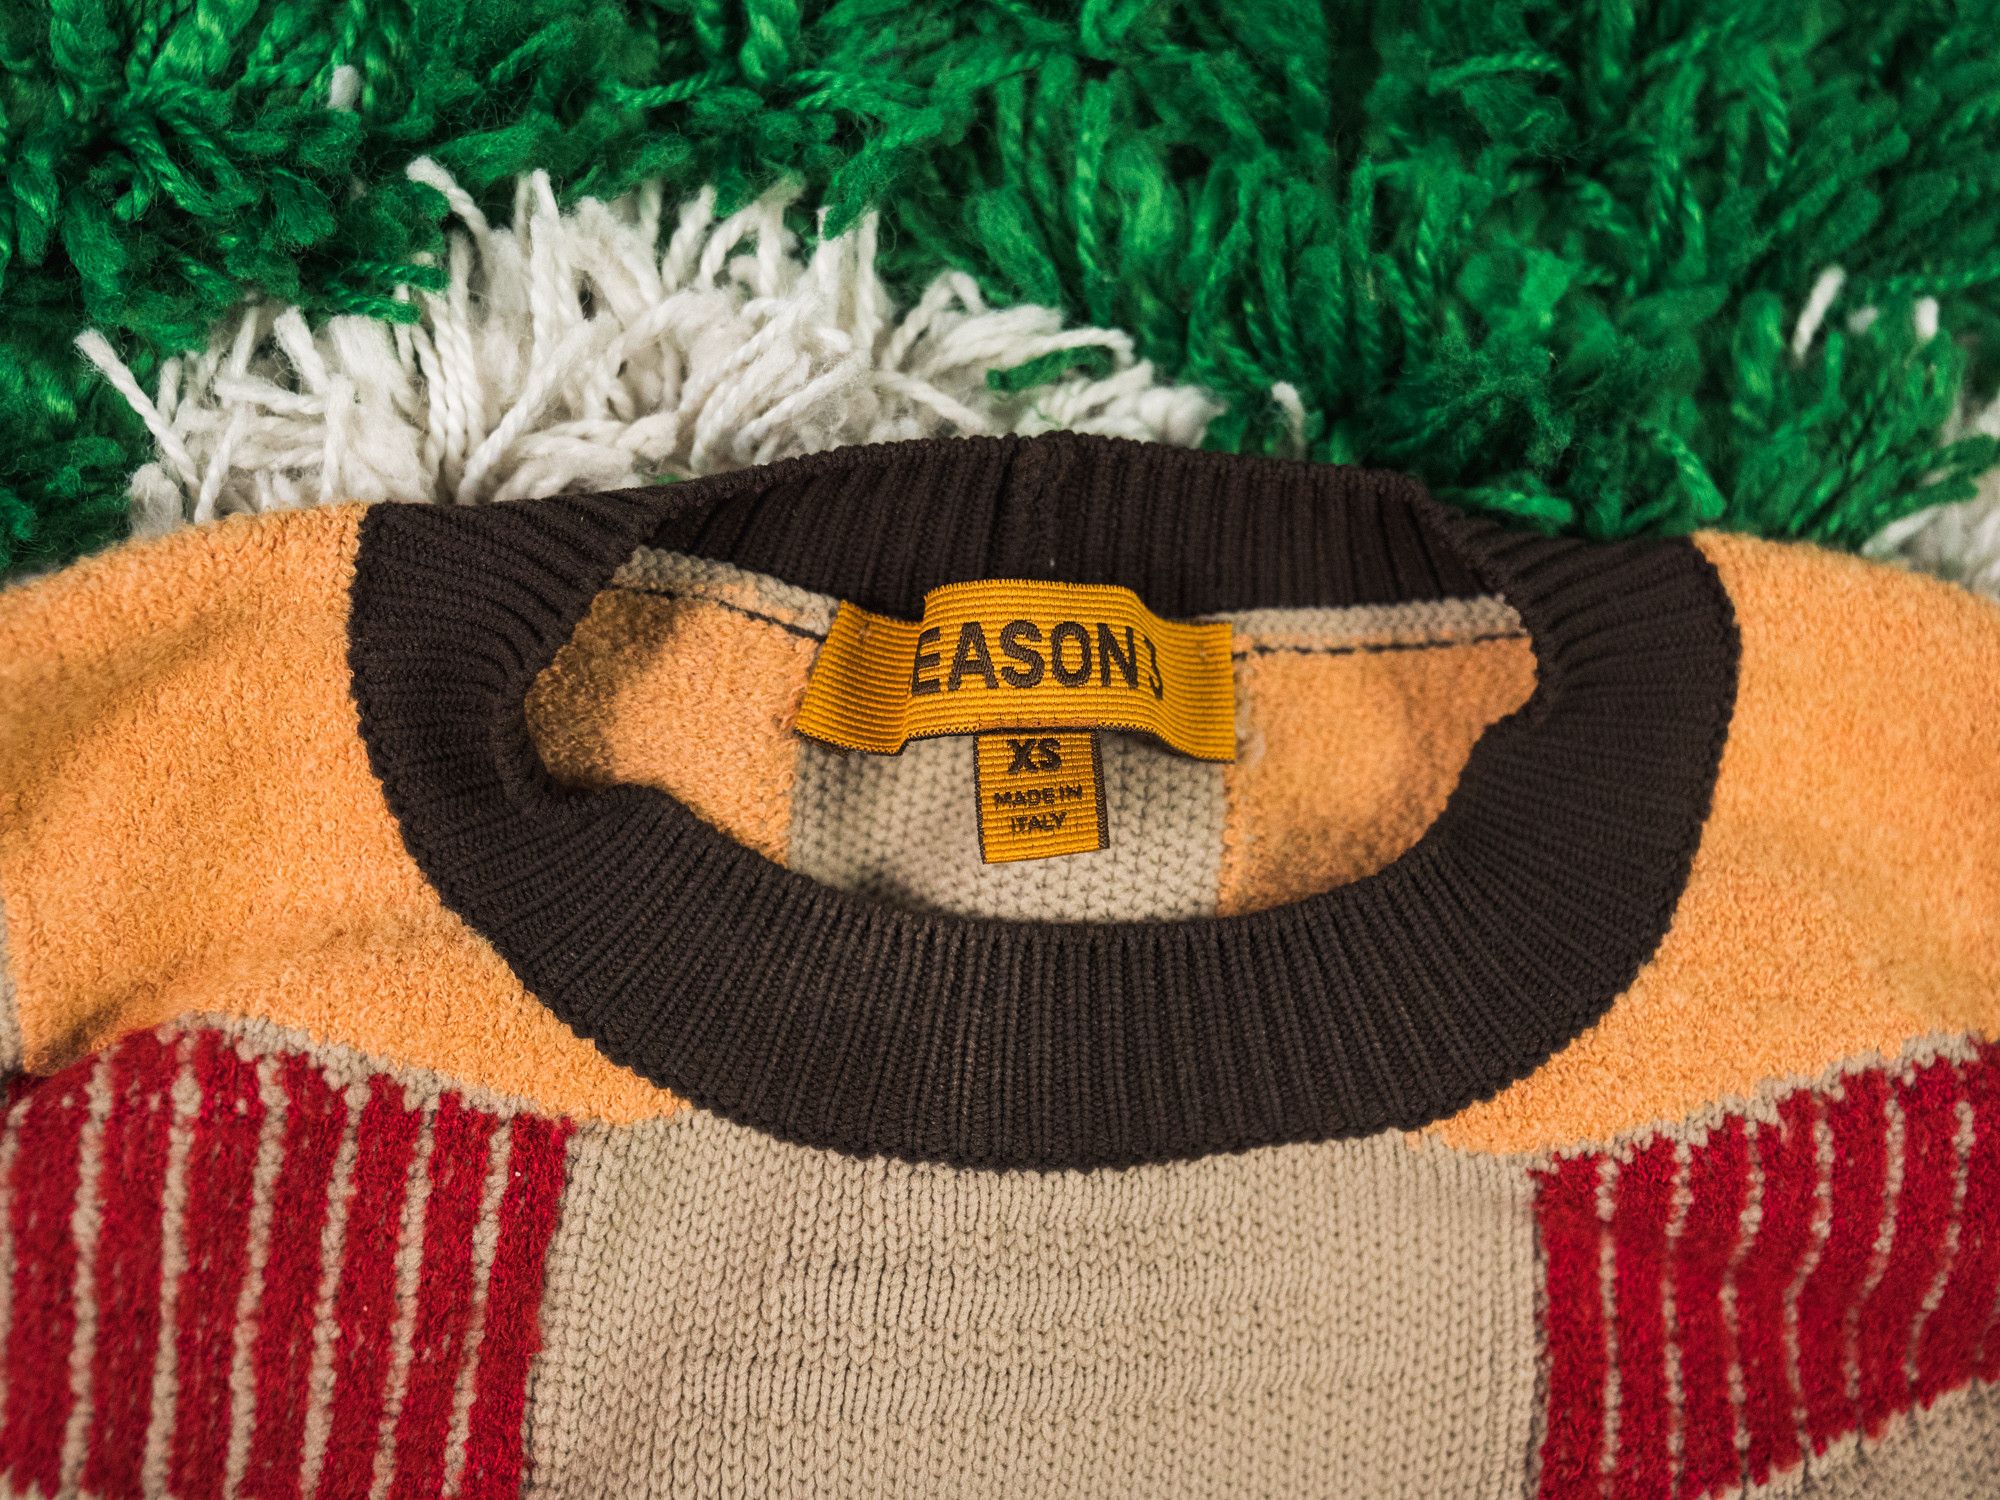 Yeezy Season YEEZY Season 3 - Sock Knit Graphic Crop Top Knitted Size XS / US 0-2 / IT 36-38 - 4 Thumbnail